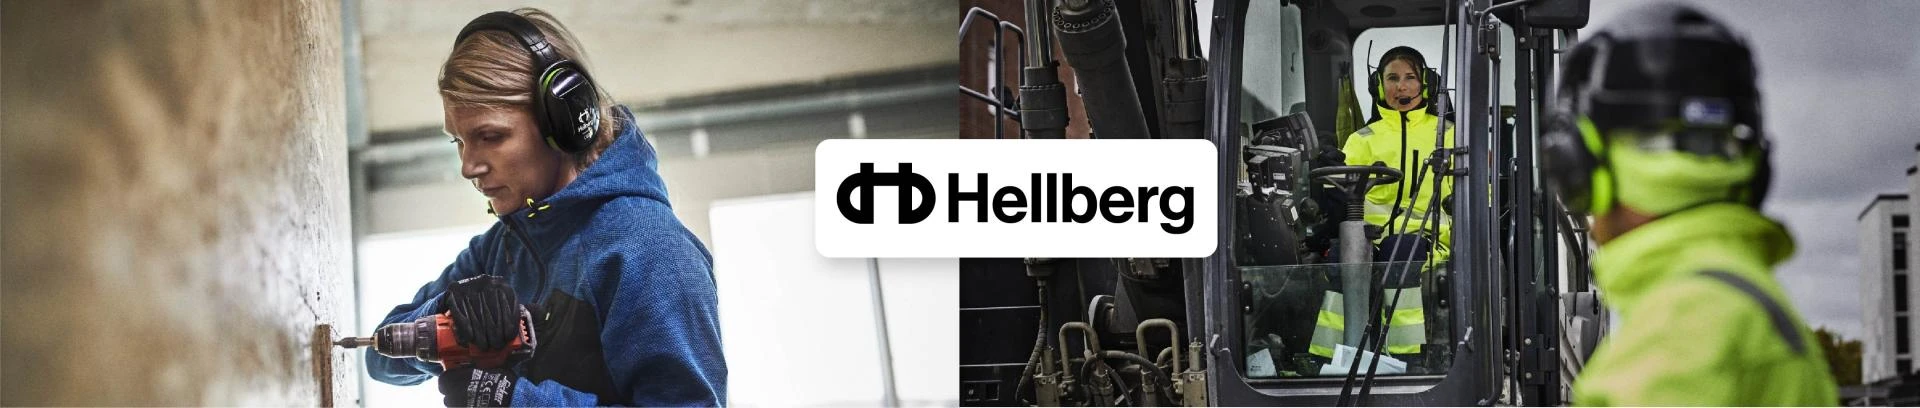 Hellberg safety